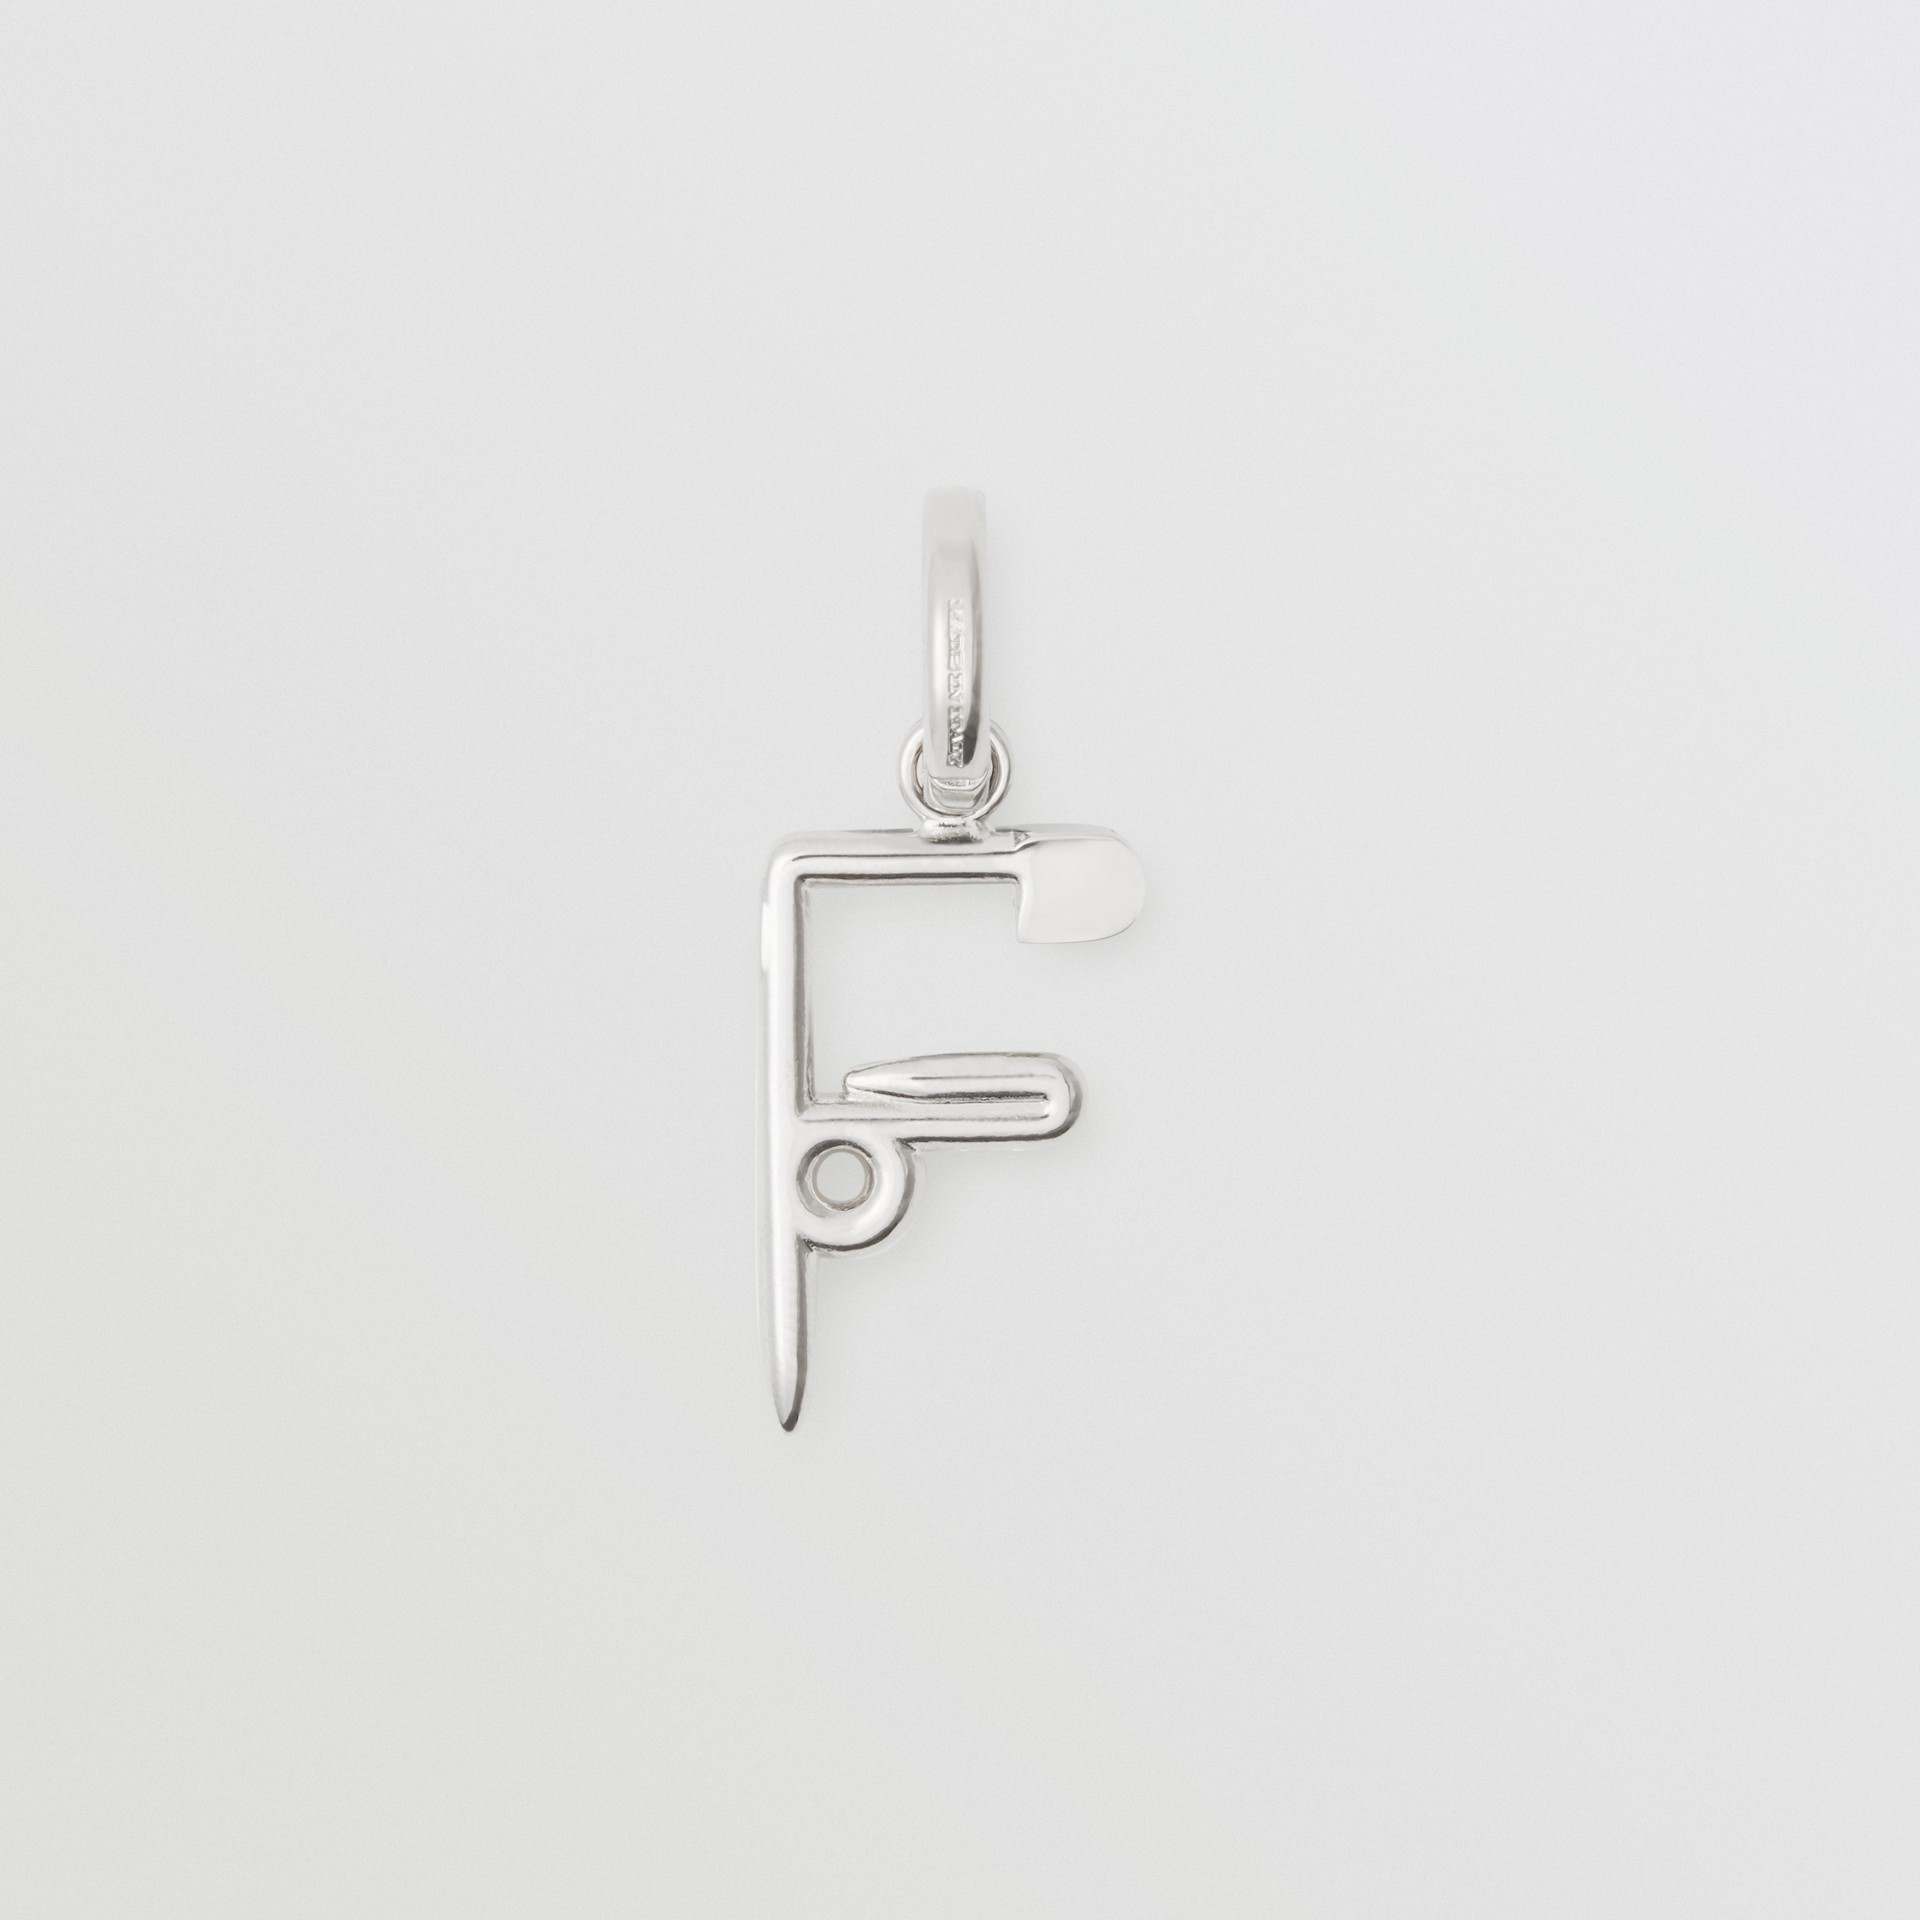 BURBERRY Kilt Pin ‘F’ Alphabet Charm